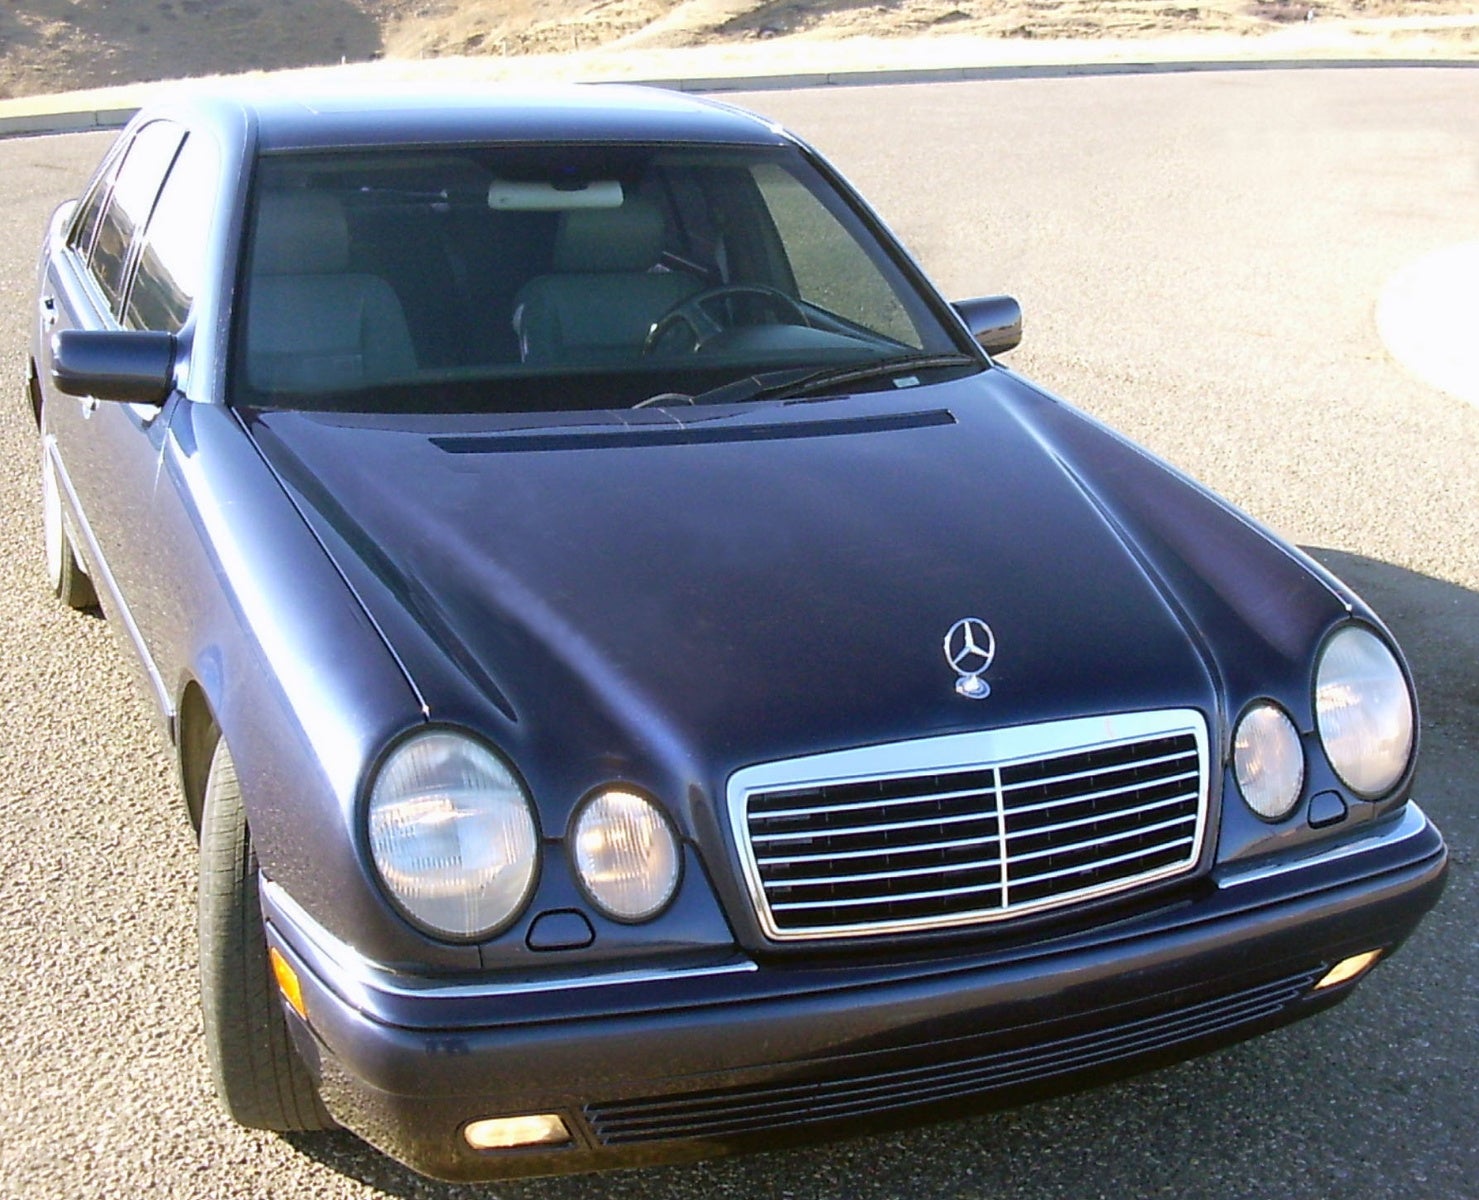 1998 Mercedes-Benz E-Class - Pictures - CarGurus